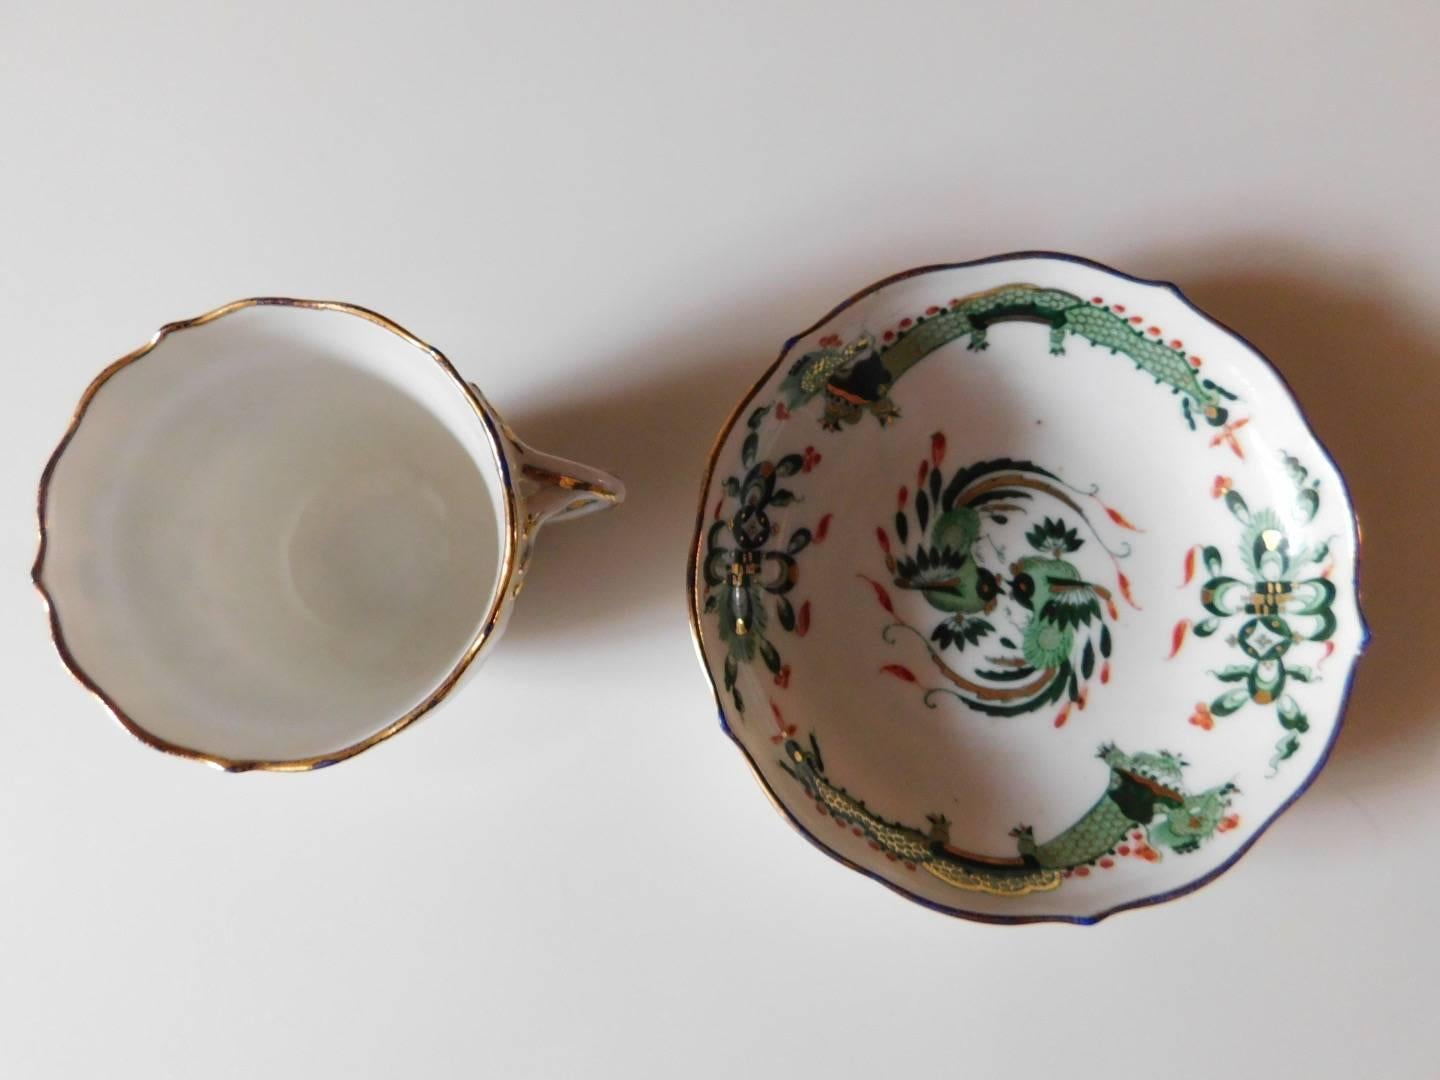 Meissen porcelain green Dragon cup an saucer
Saucer measures 4.25in diameter.